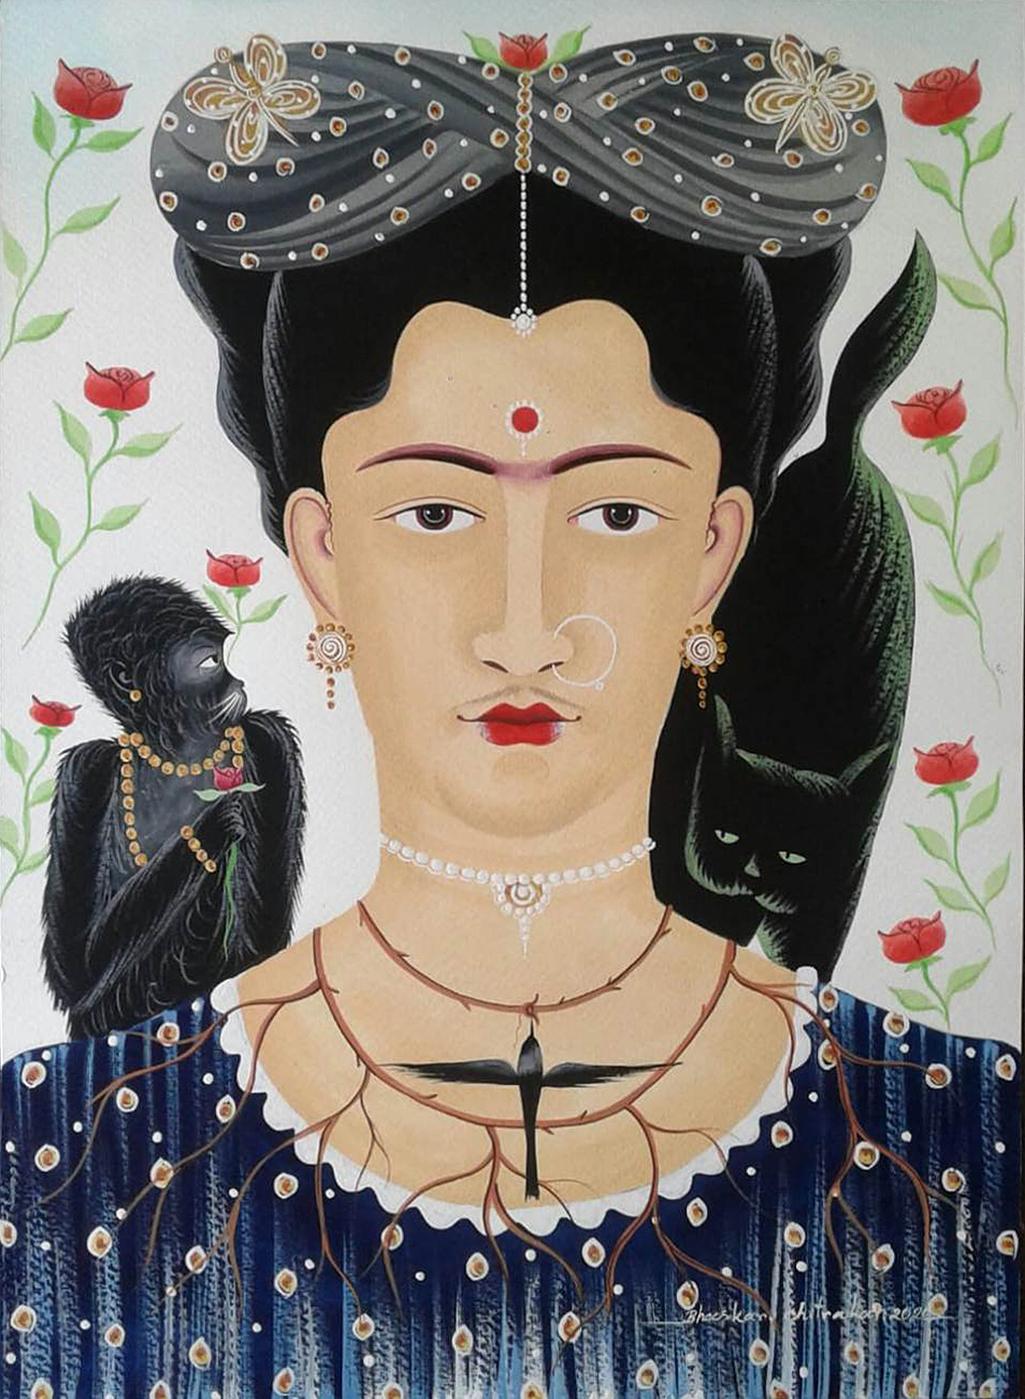 Bhaskar Chitrakar Interior Painting - Frida Kahlo, Watercolour & Gouache on Paper by Contemporary Artist “In Stock"